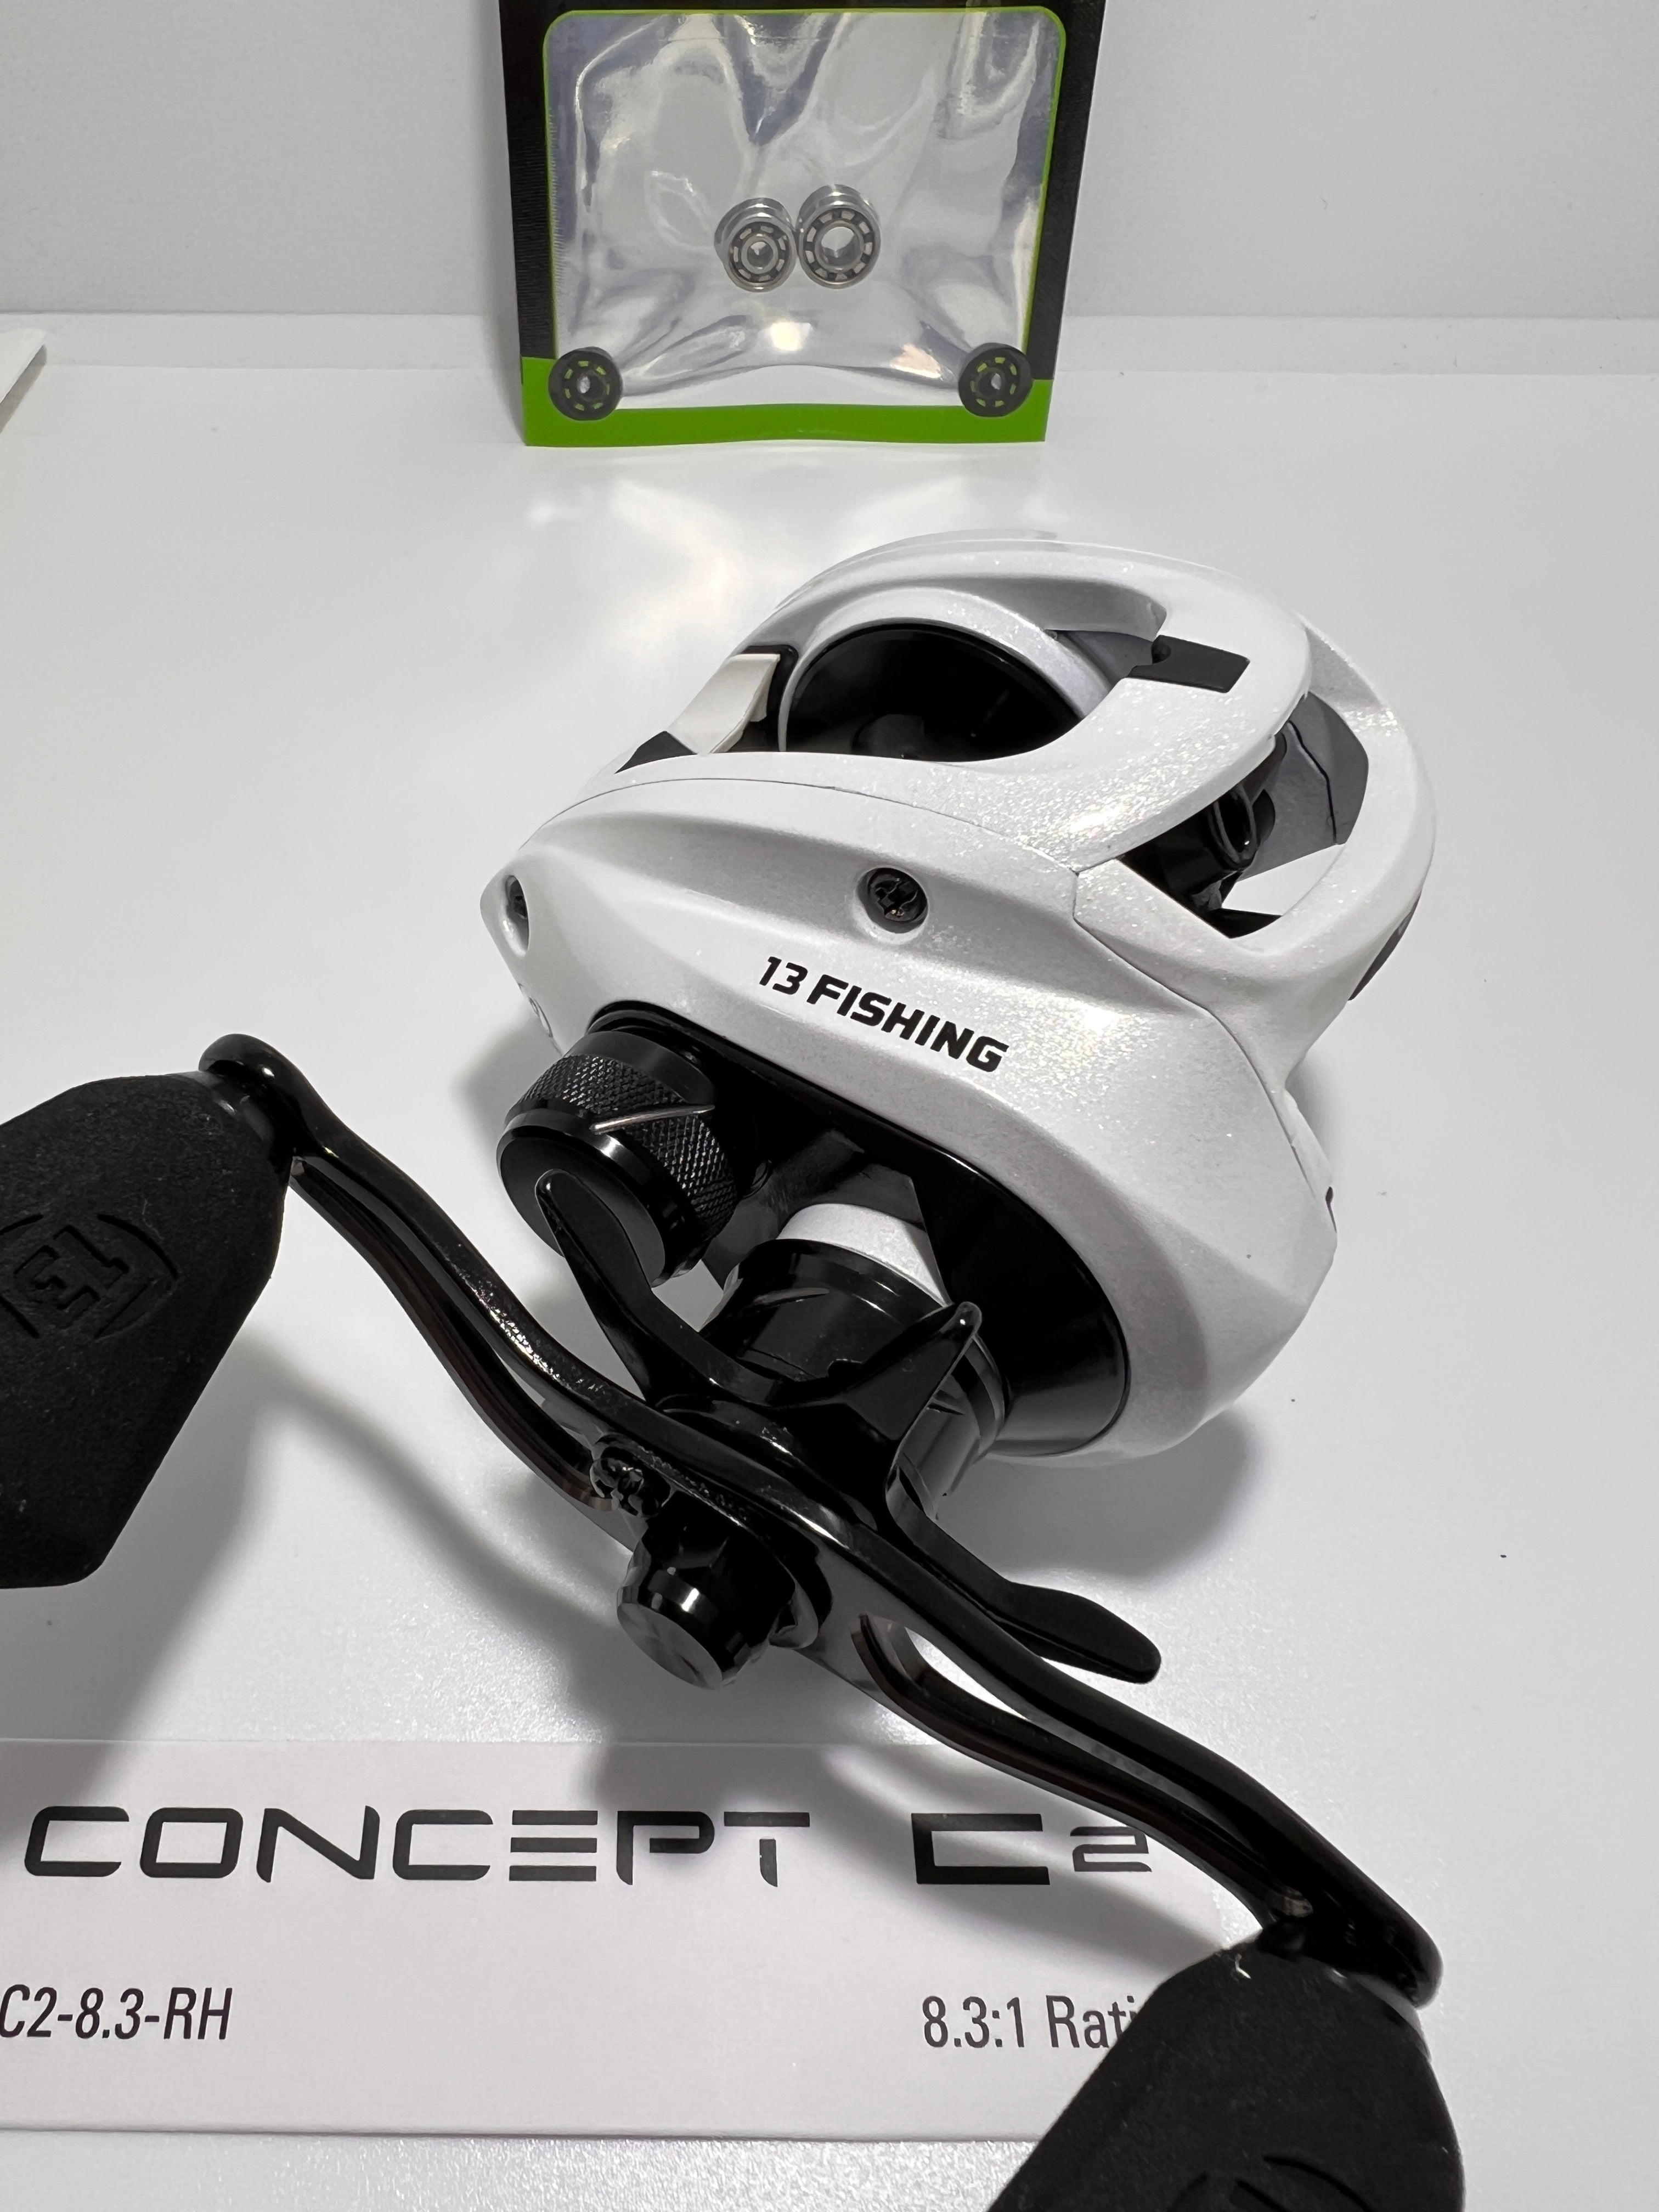 Tuned 13Fishing Concept C2 – Spool Hi-Speed Bearings